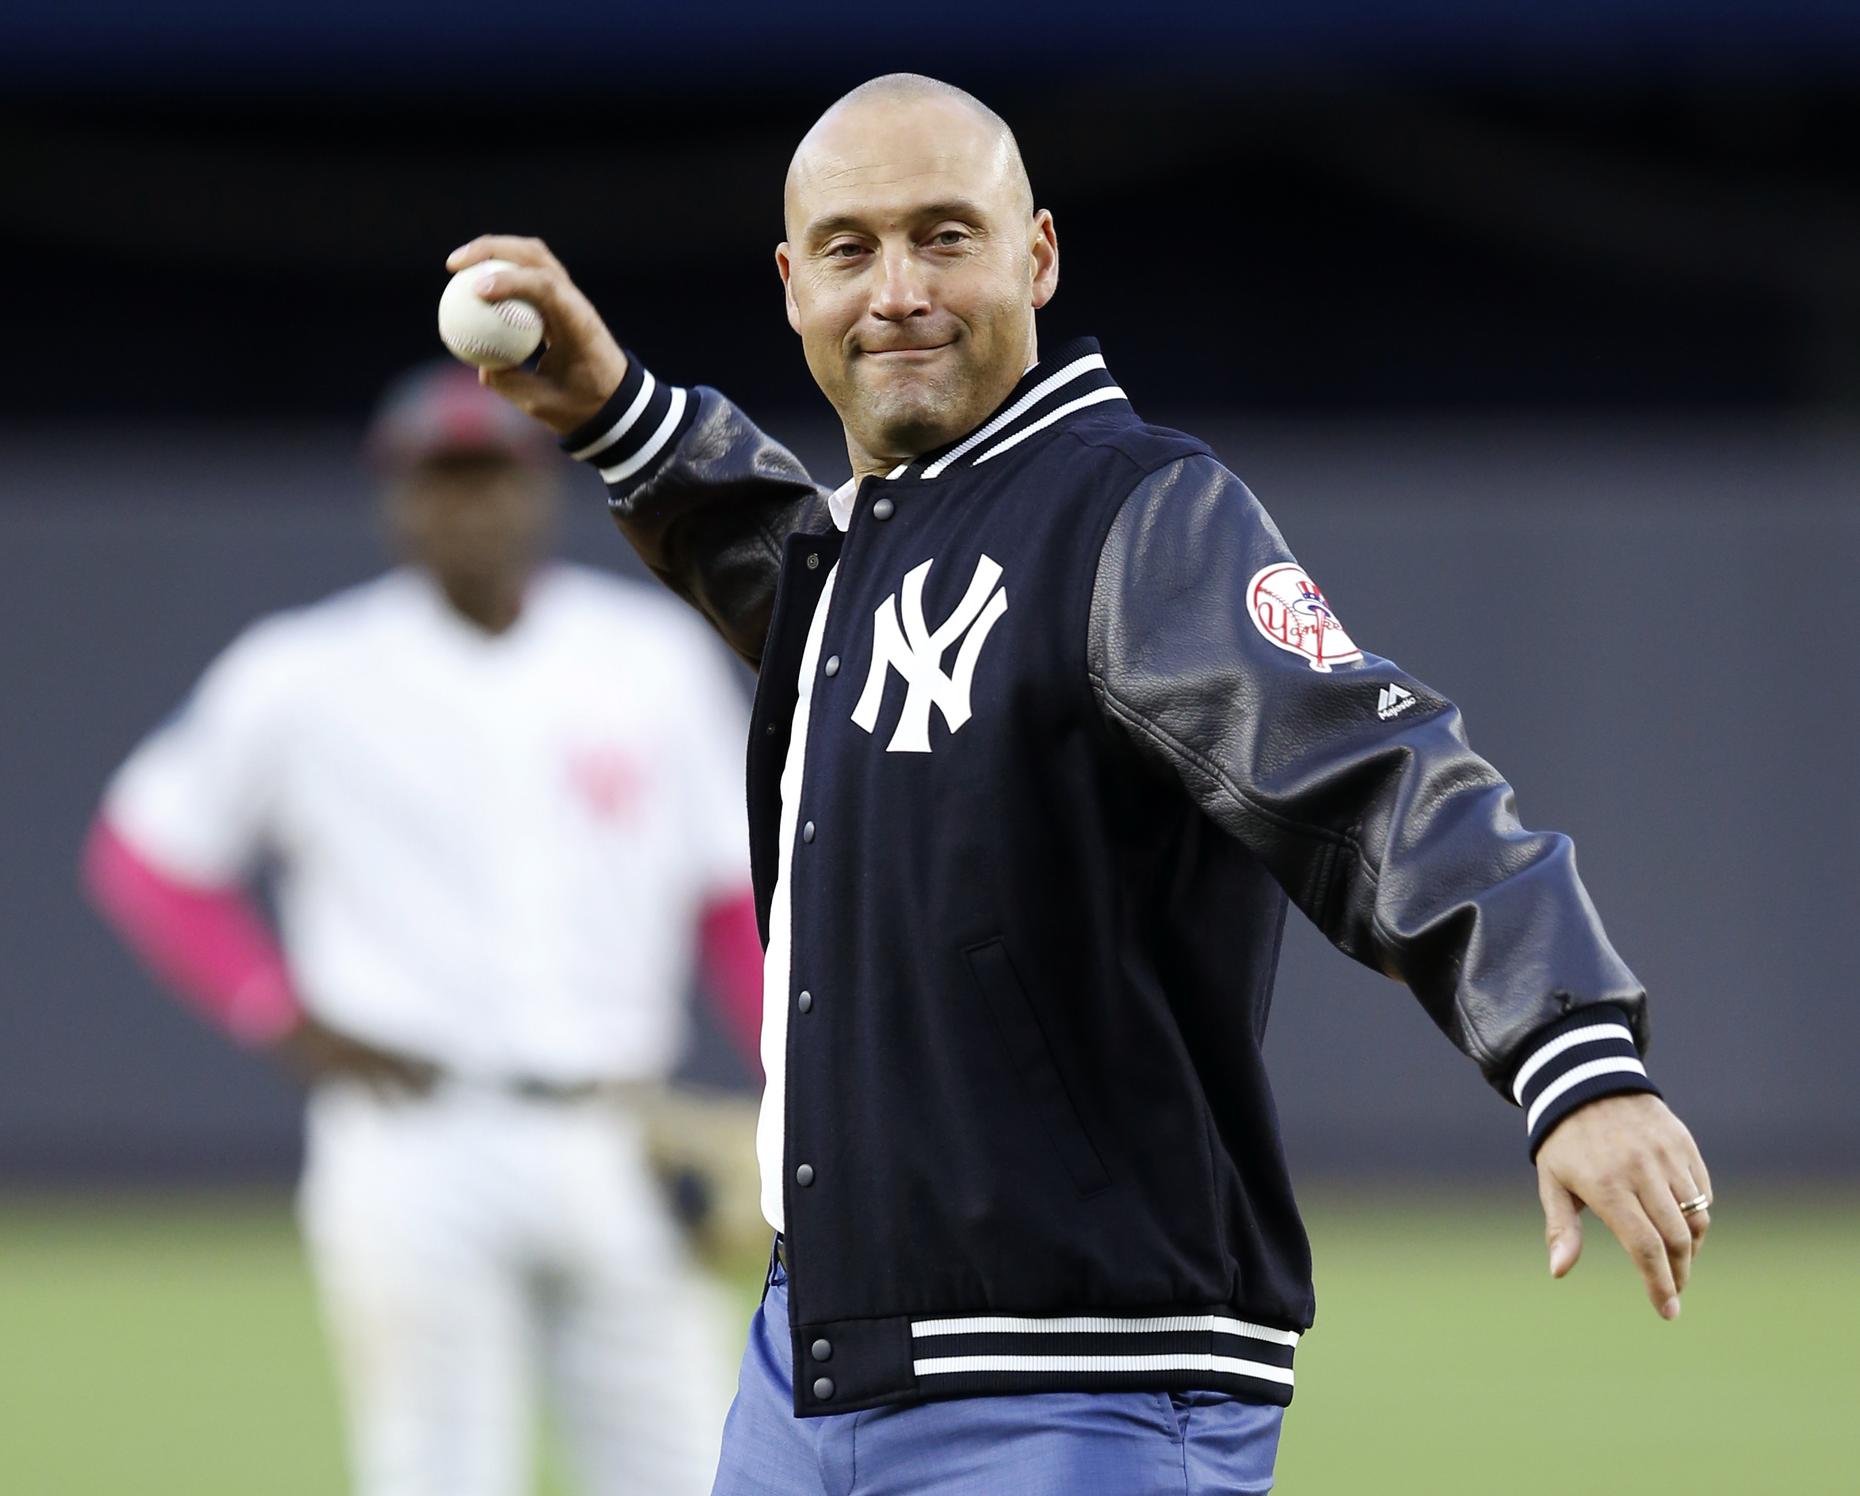 Emotional Andy Pettitte says thanks as New York Yankees retire his No 46  shirt, New York Yankees